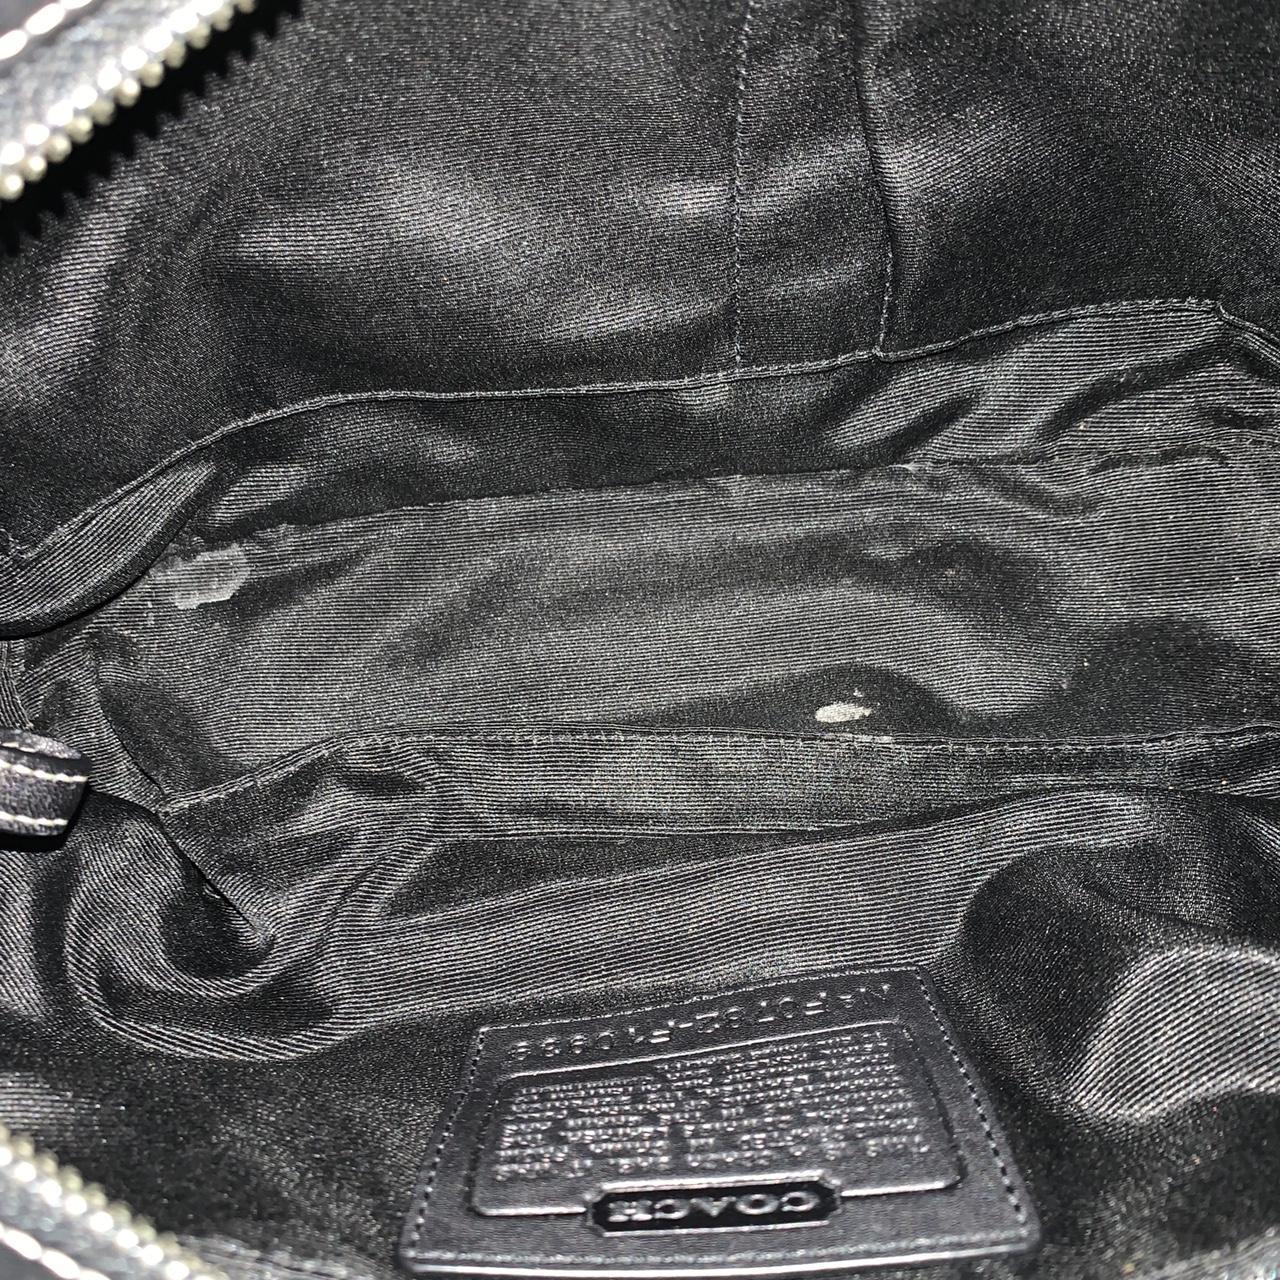 black mini coach bag (Thrifted never really - Depop